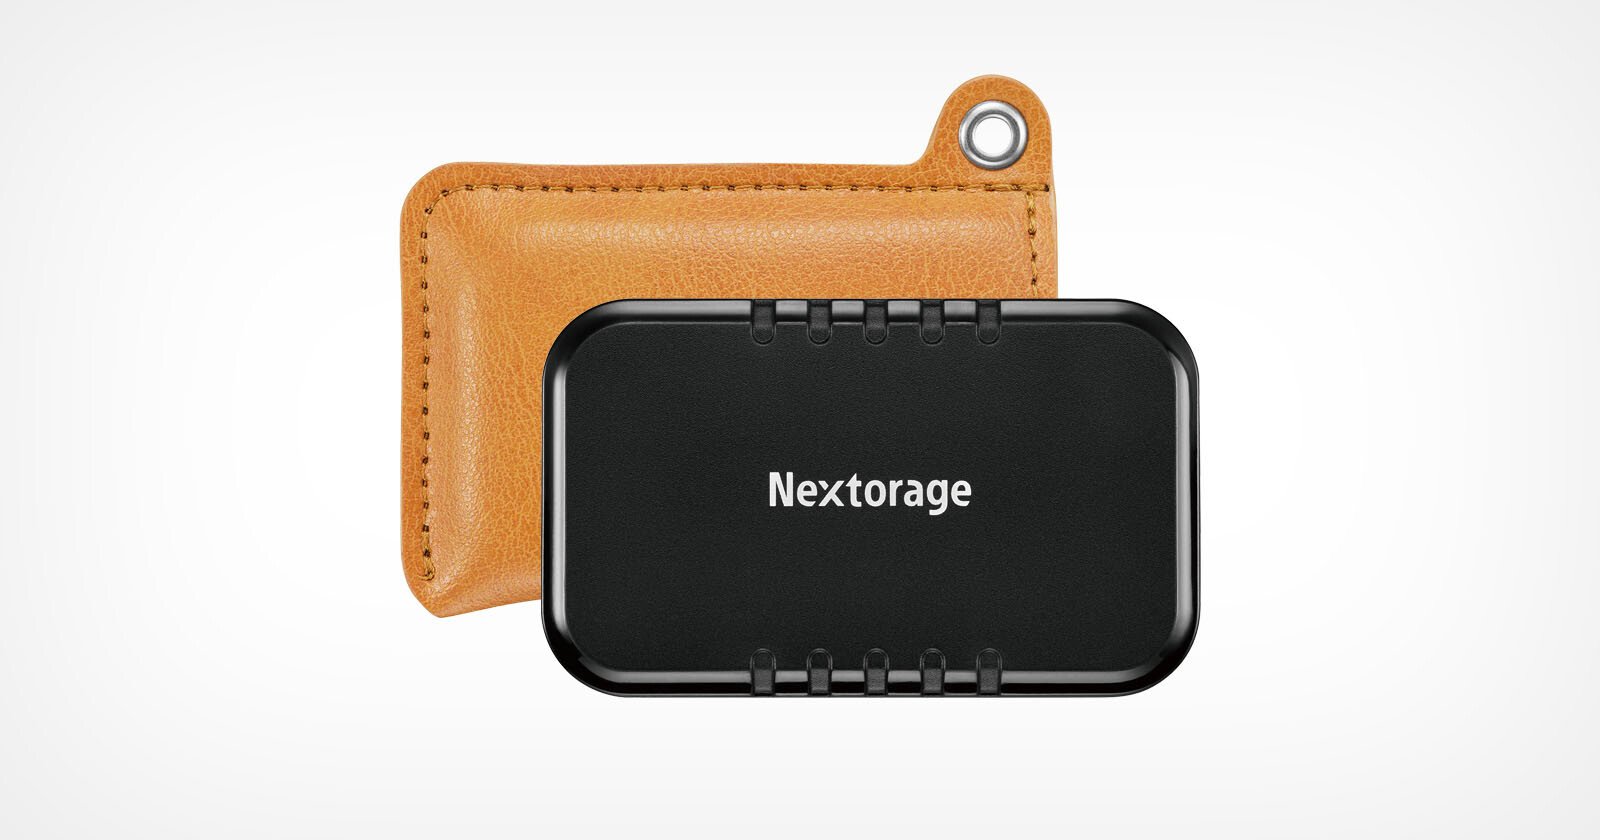  nextorage portable ssd super-fast pocket-sized 